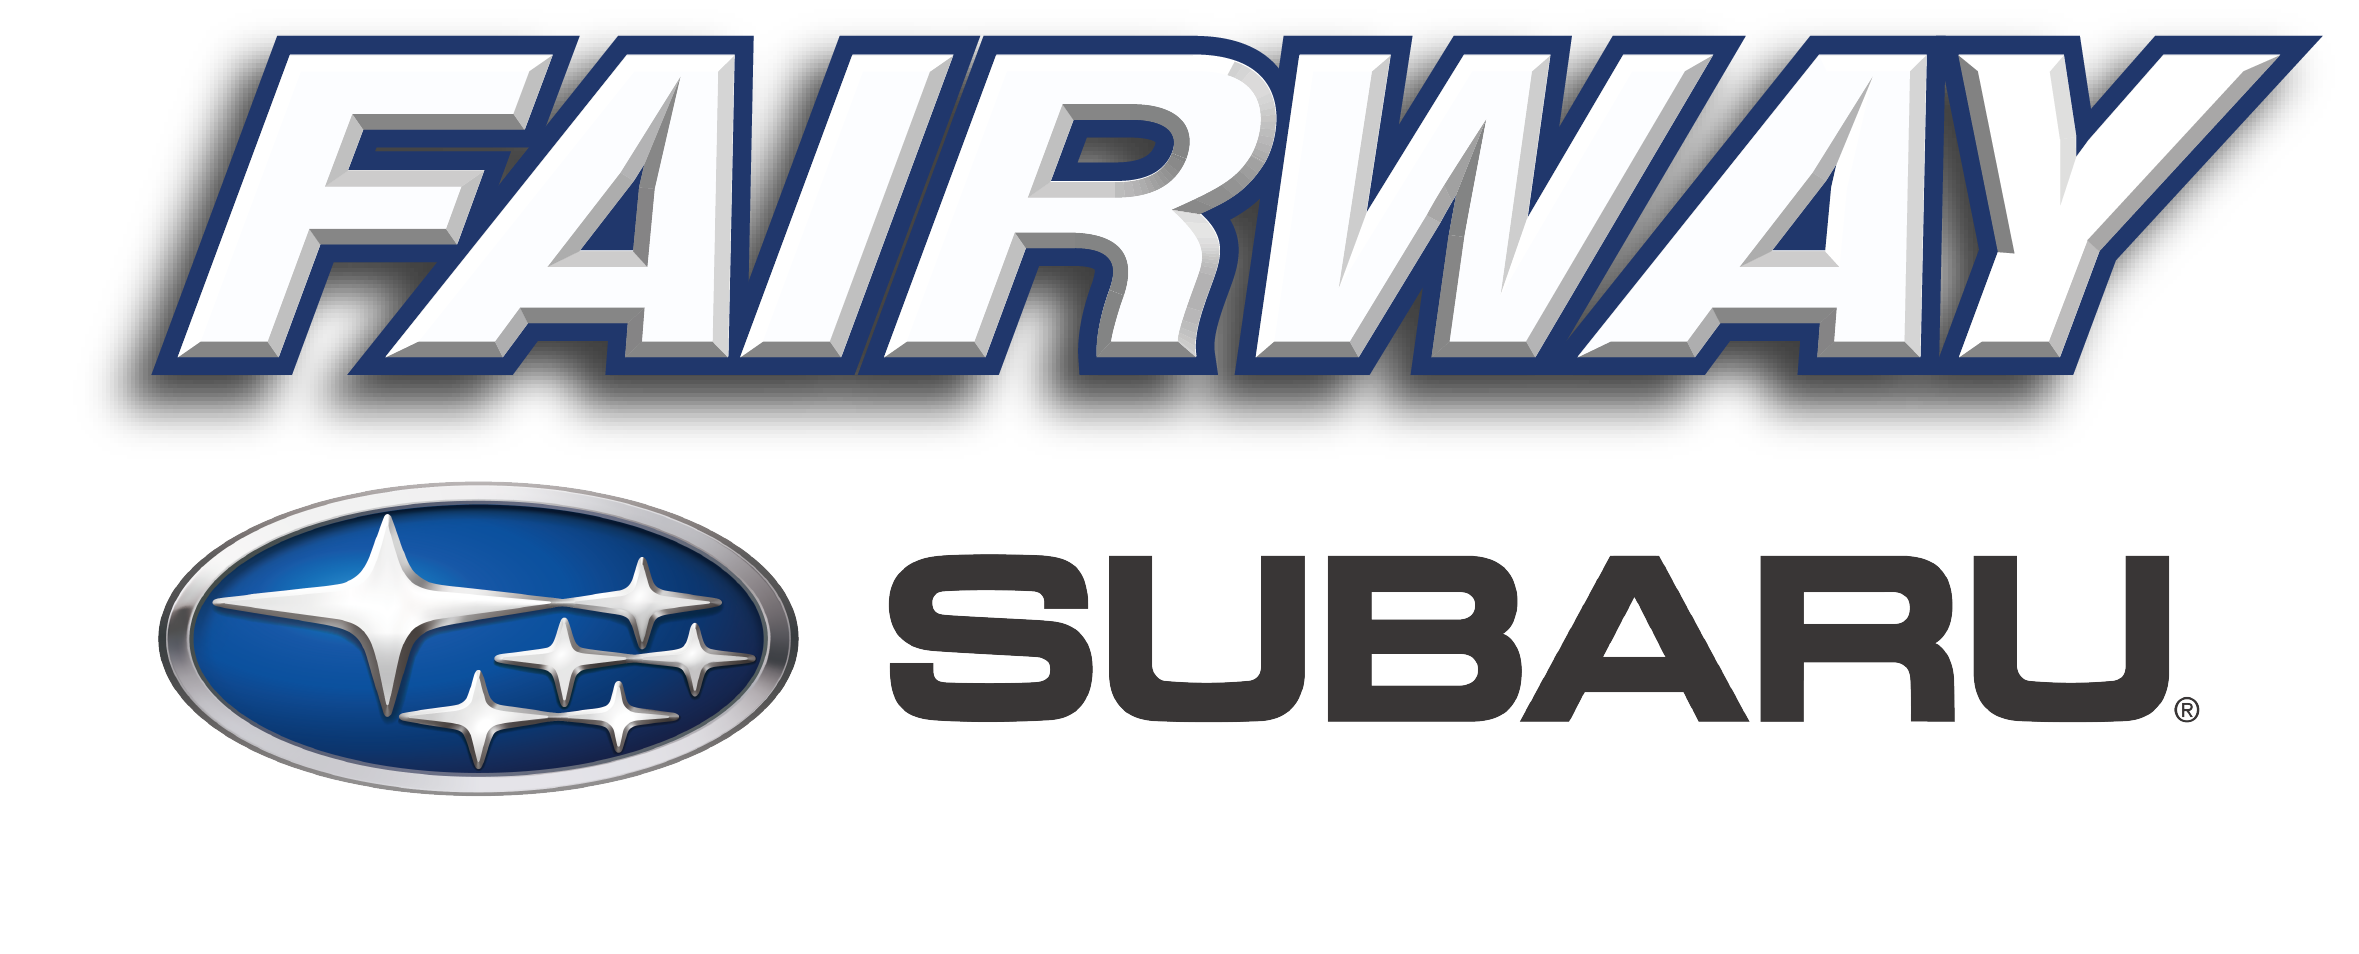 D. Fairway Subaru (acero)